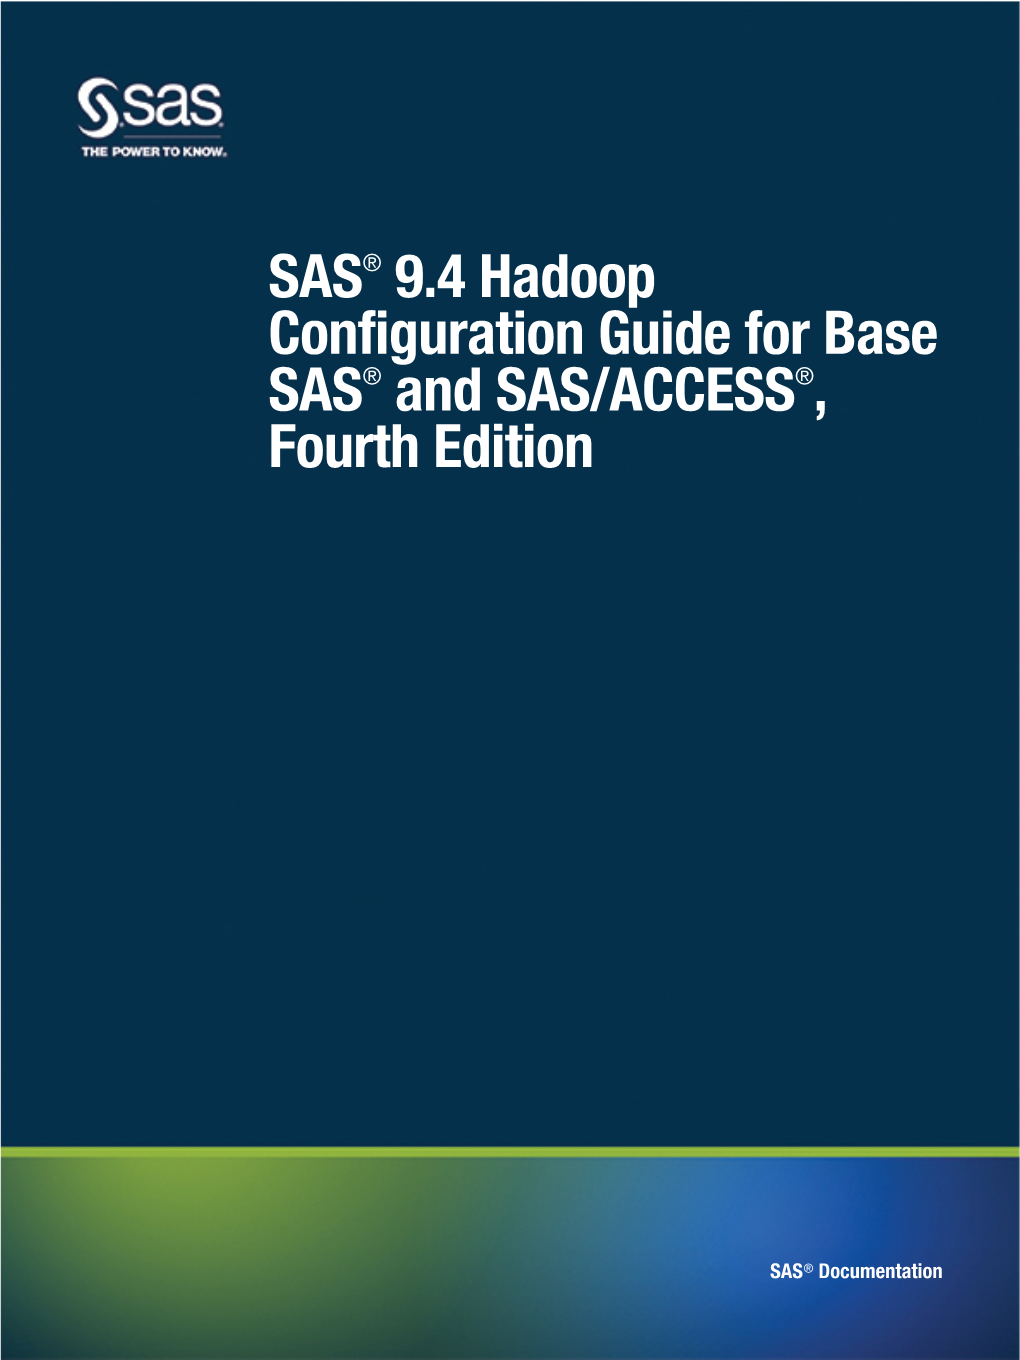 SAS 9.4 Hadoop Configuration Guide for Base SAS and SAS/ACCESS